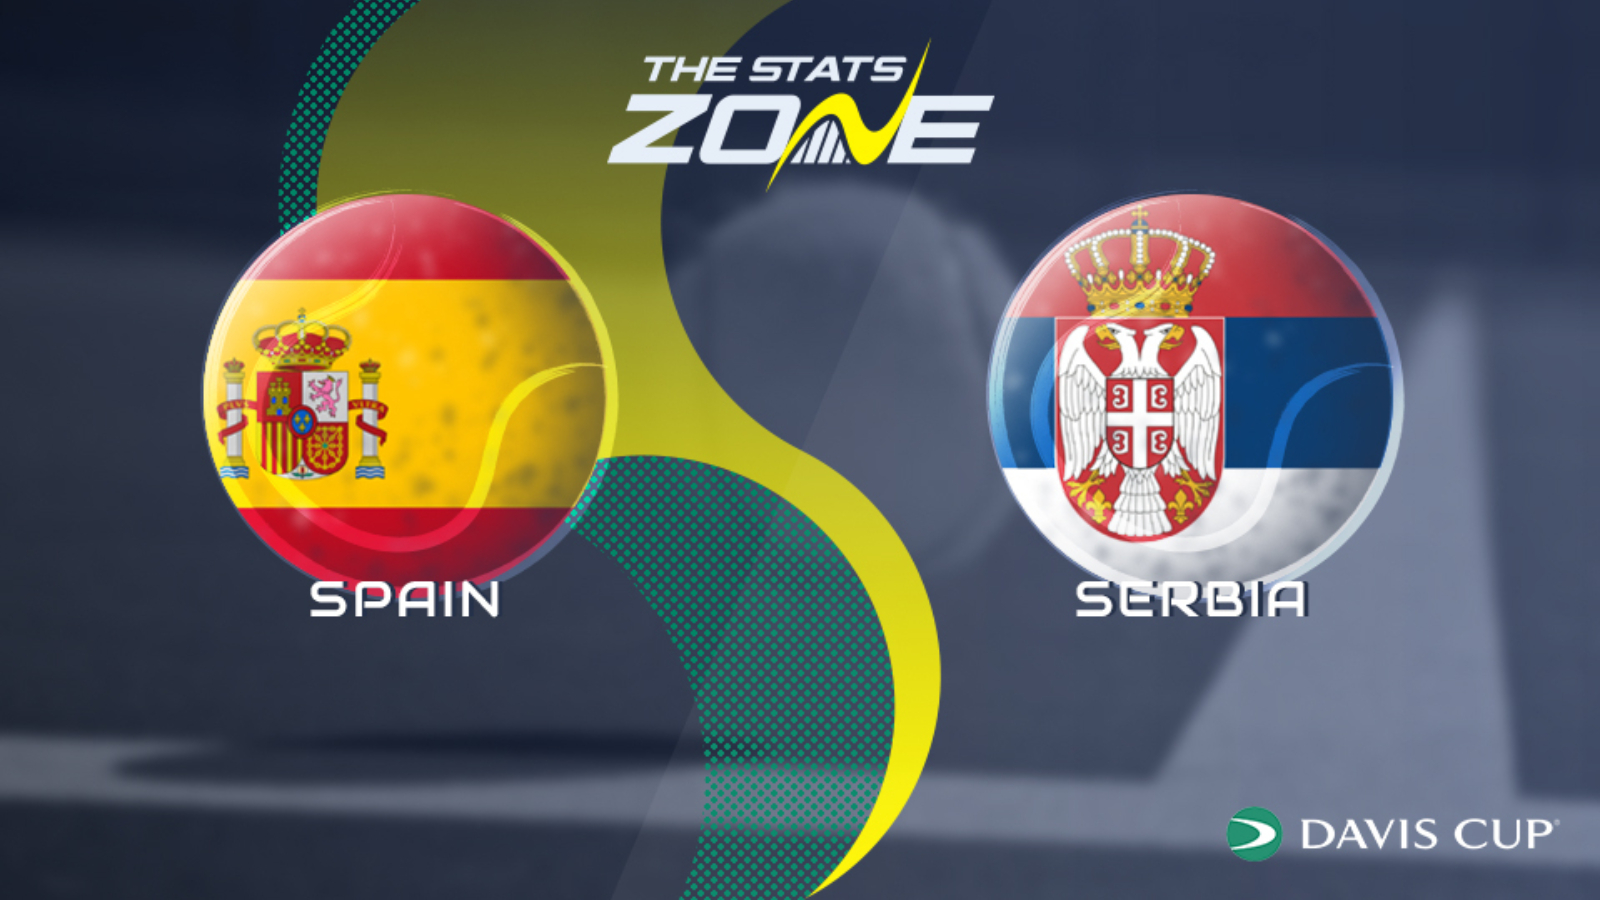 Spain v serbia betting previews nfl super bowl bets